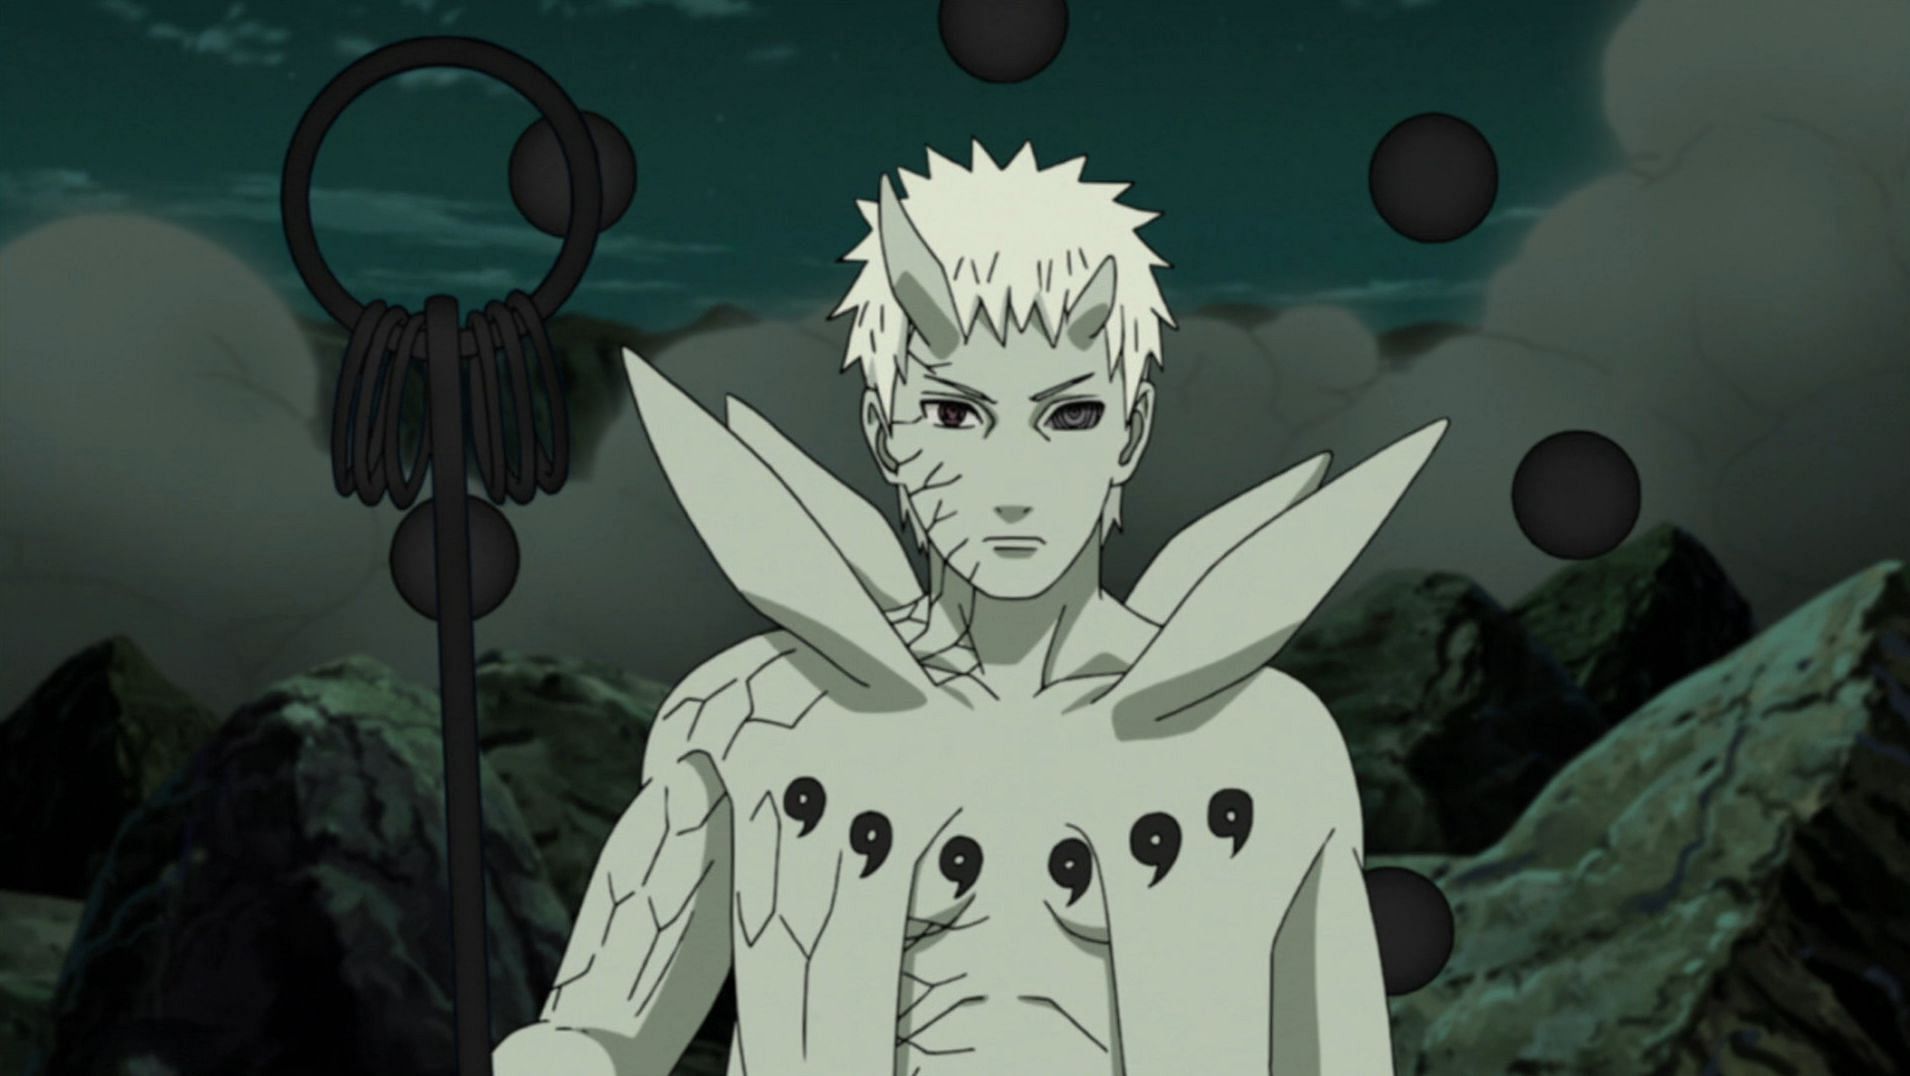 Obito was the shinobi of Konoha and a member of the Uchiha clan in Naruto. 